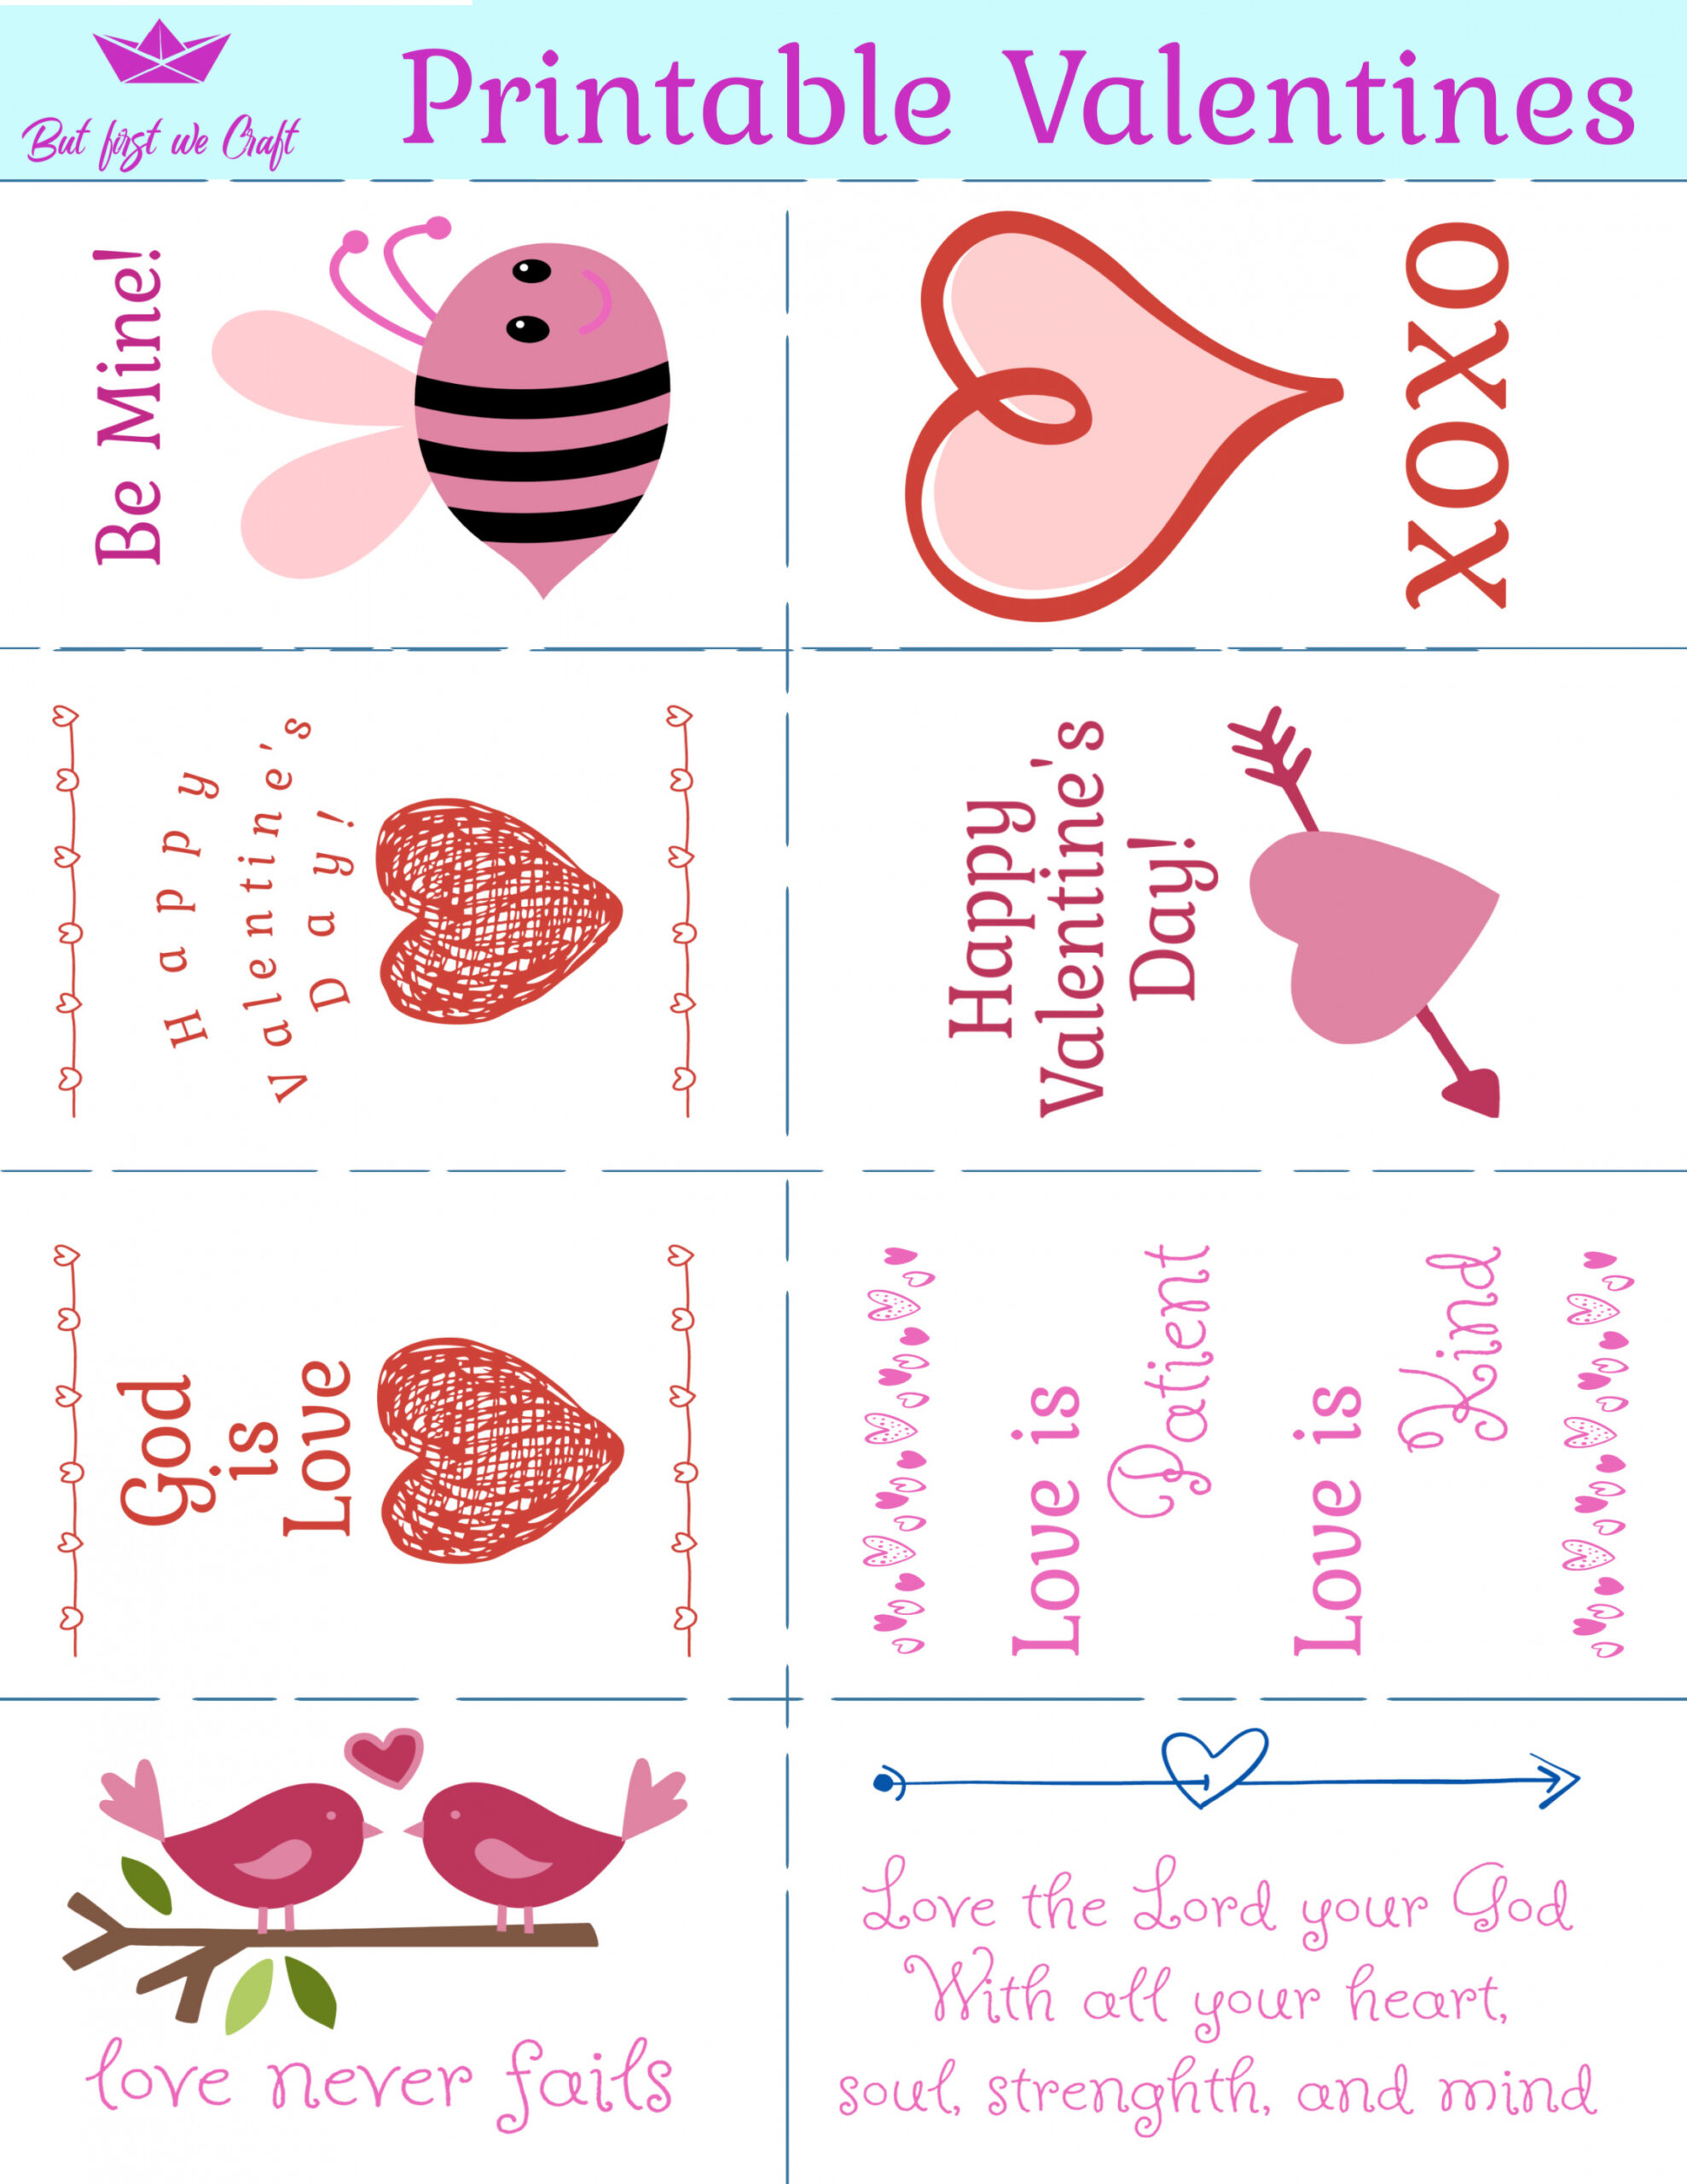 Printable Valentines Cards Free - Printable - New Free Printable Valentine